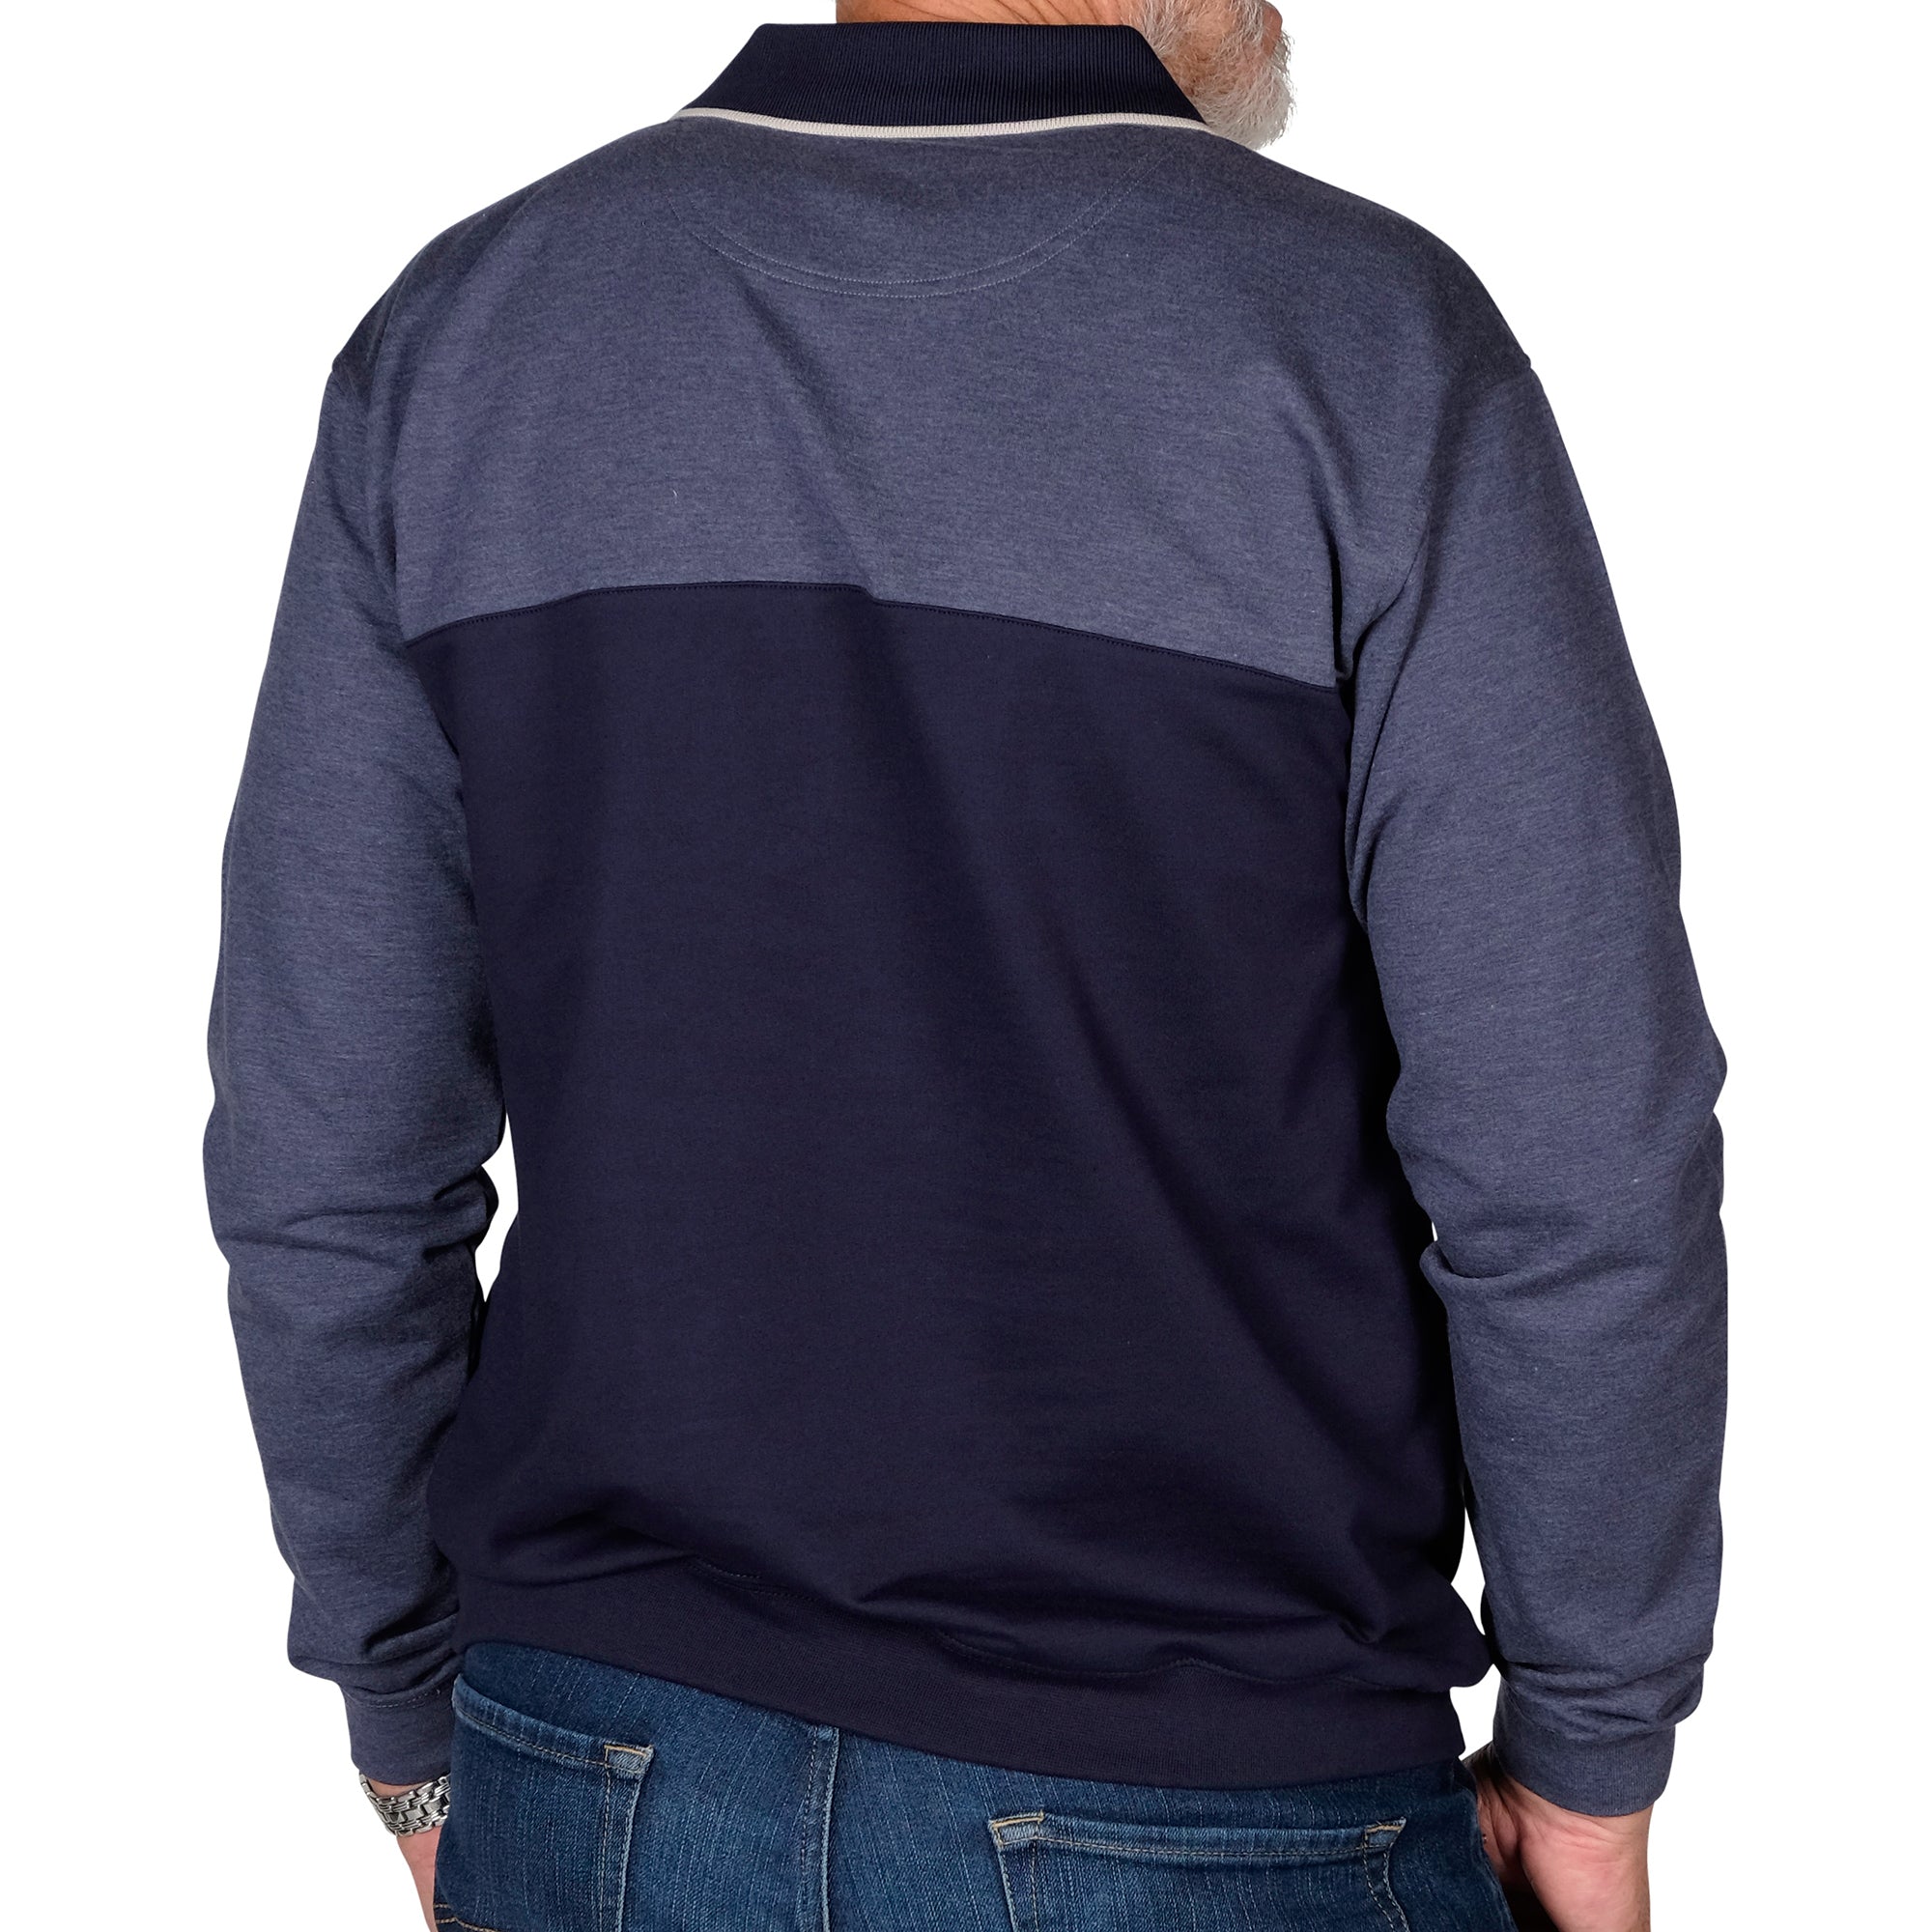 Classics by Palmland Long Sleeve Banded Bottom Shirt 6198-307 Navy